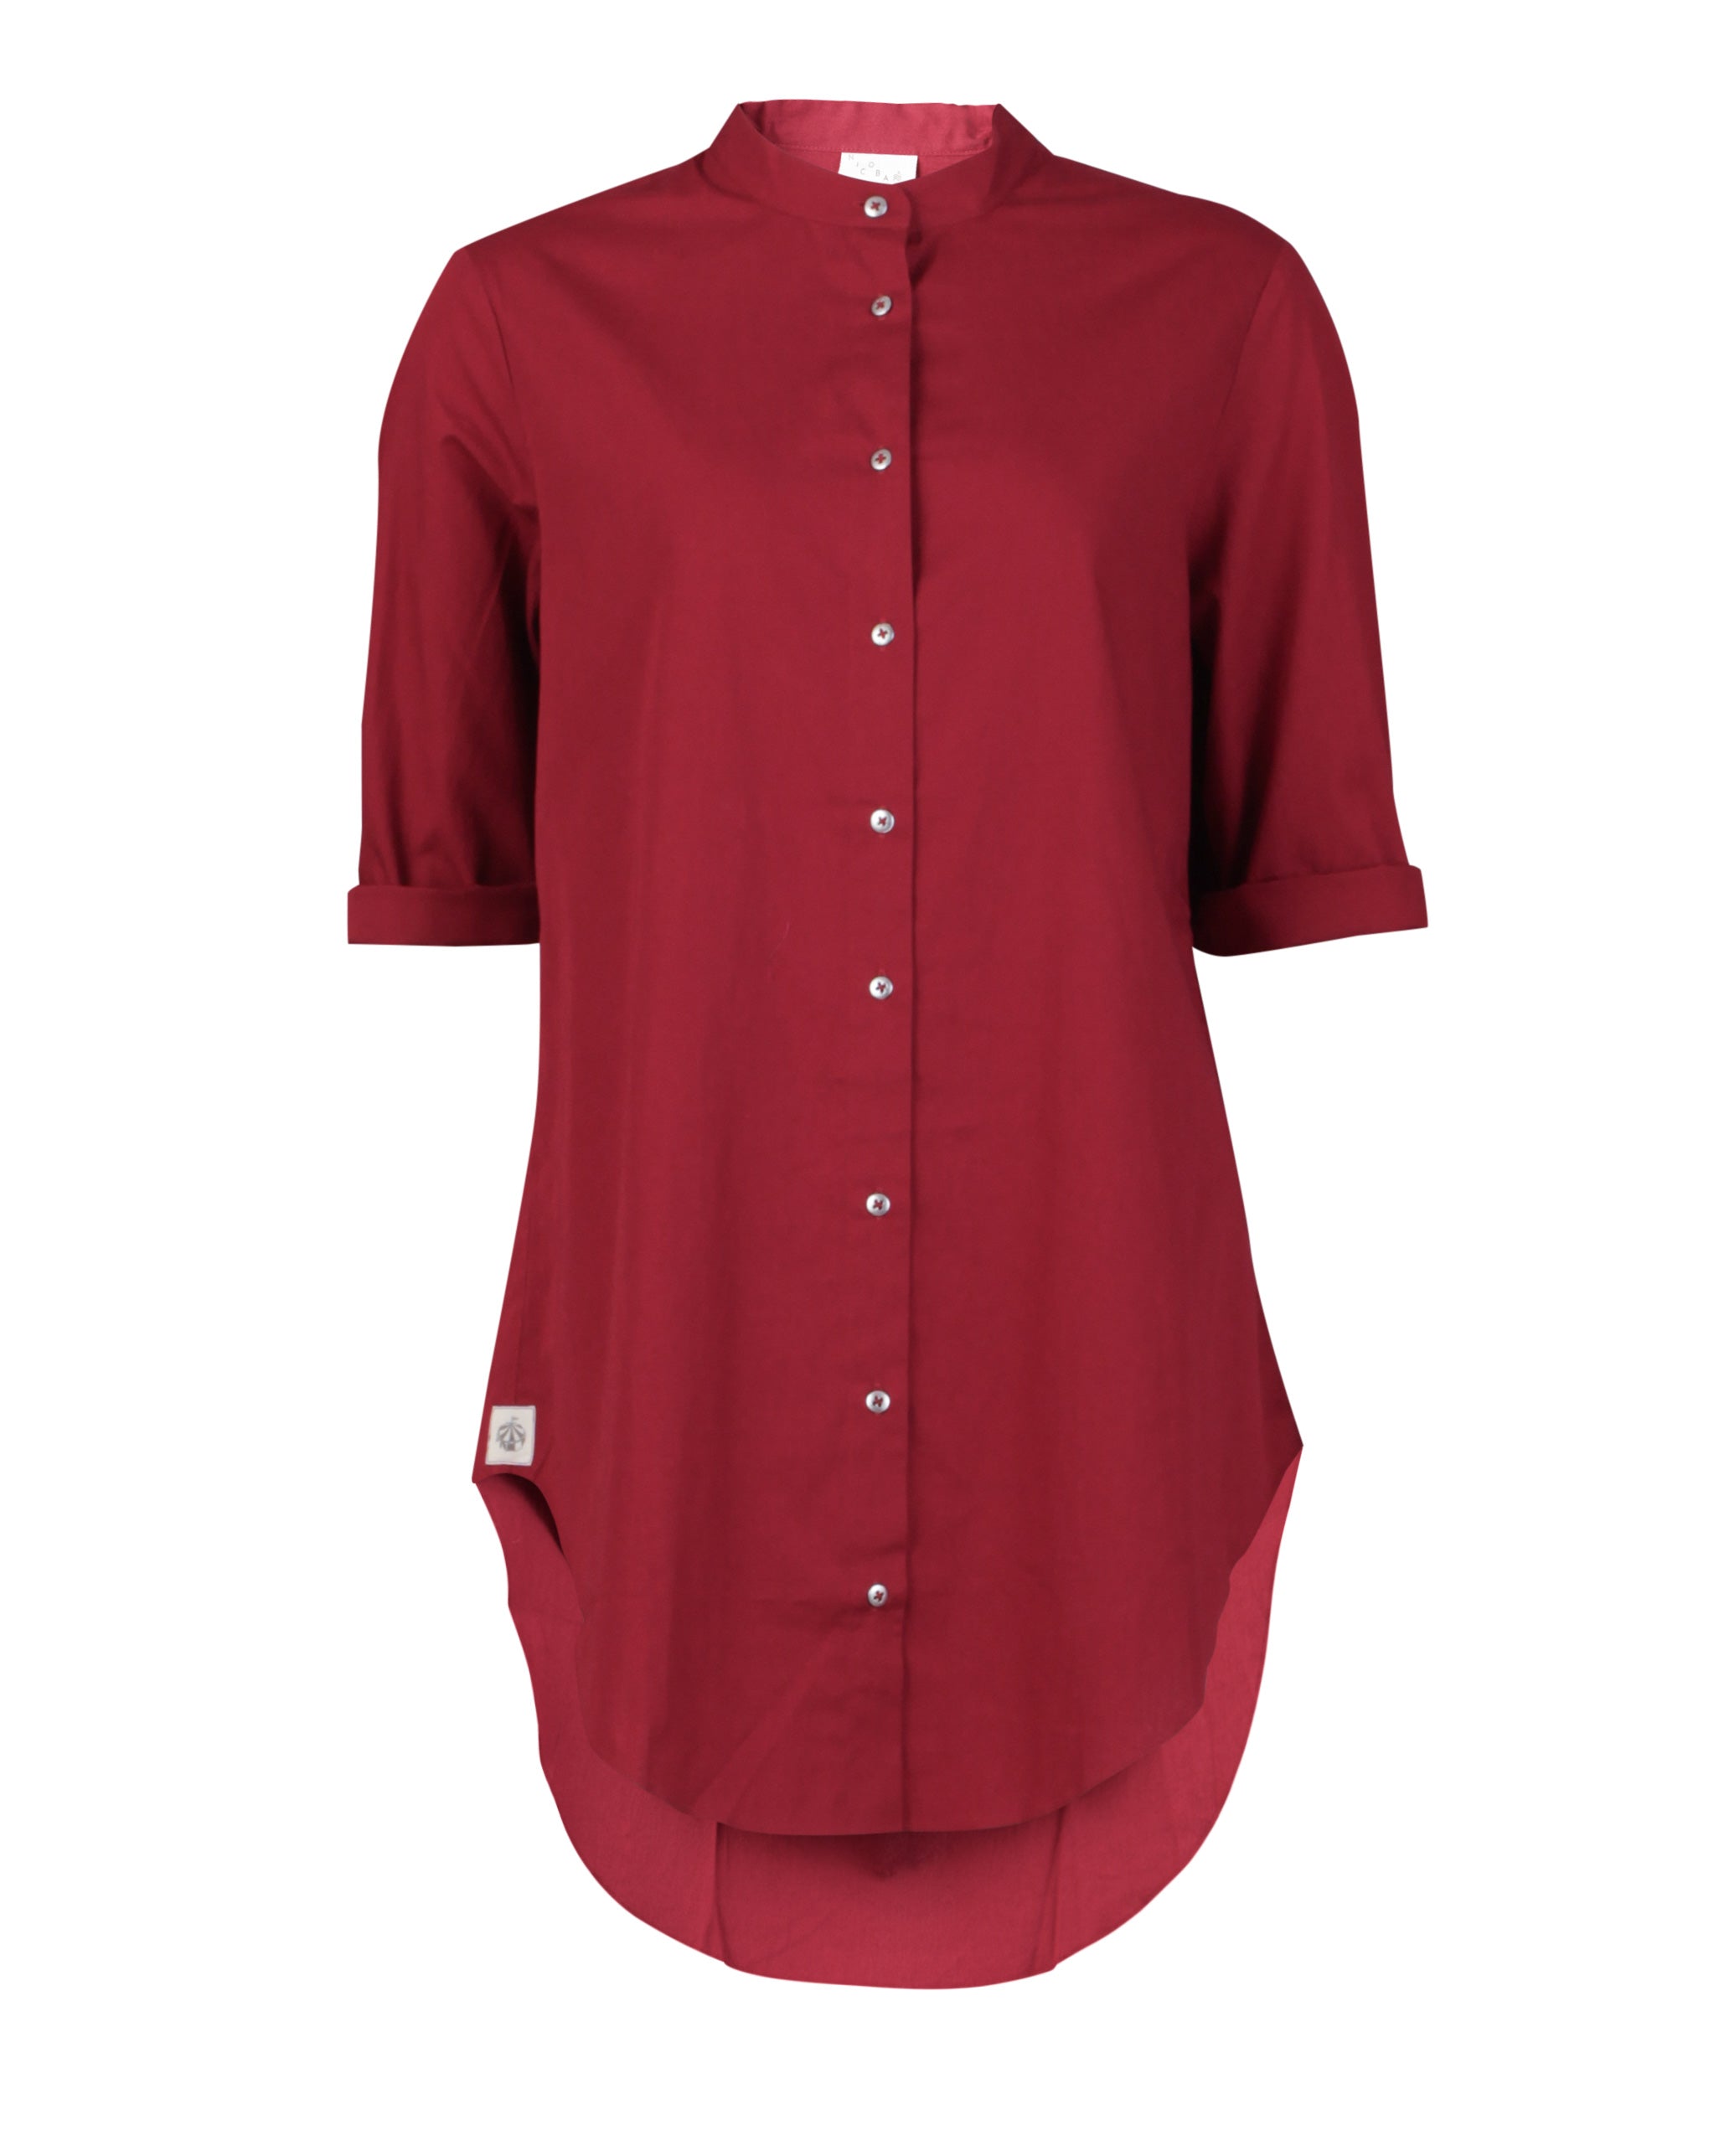 Eclipse Shirt - Red